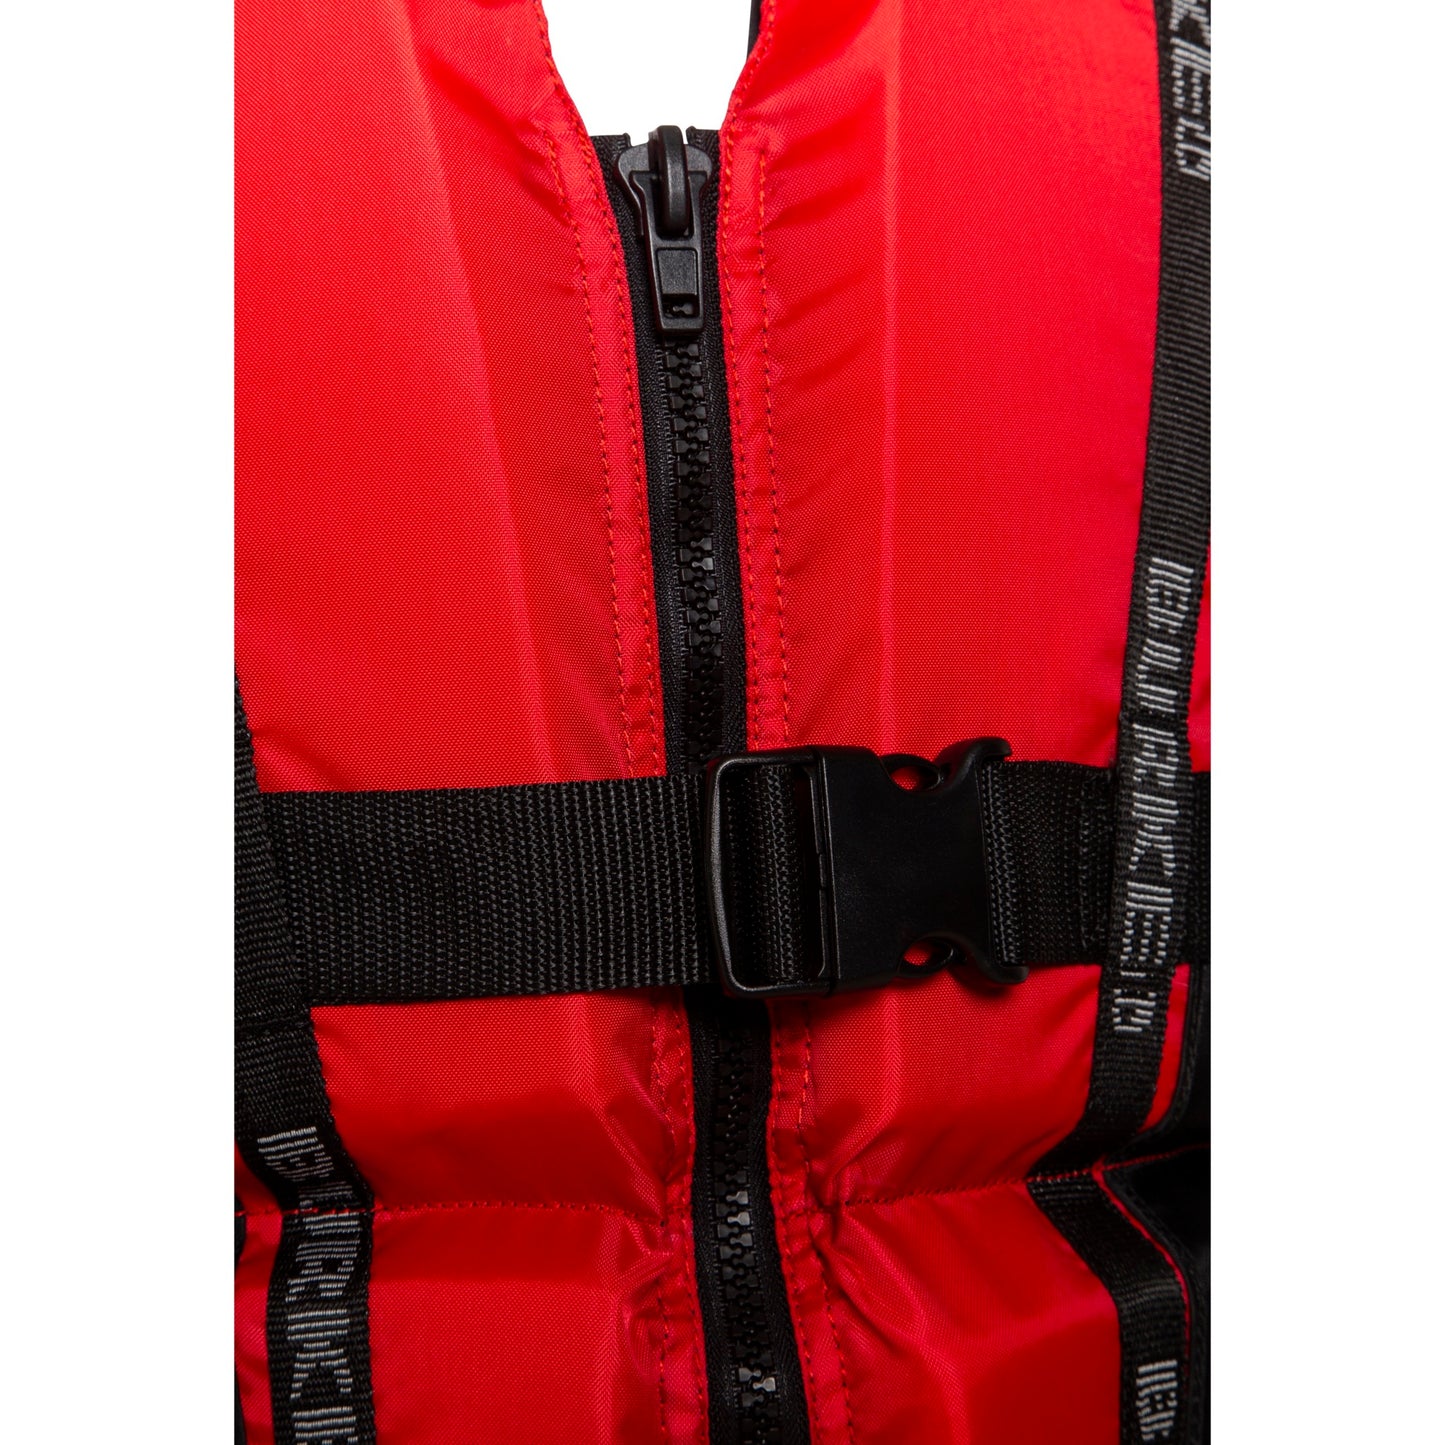 M50 Multipurpose Front Entry Level 50 Lifejacket